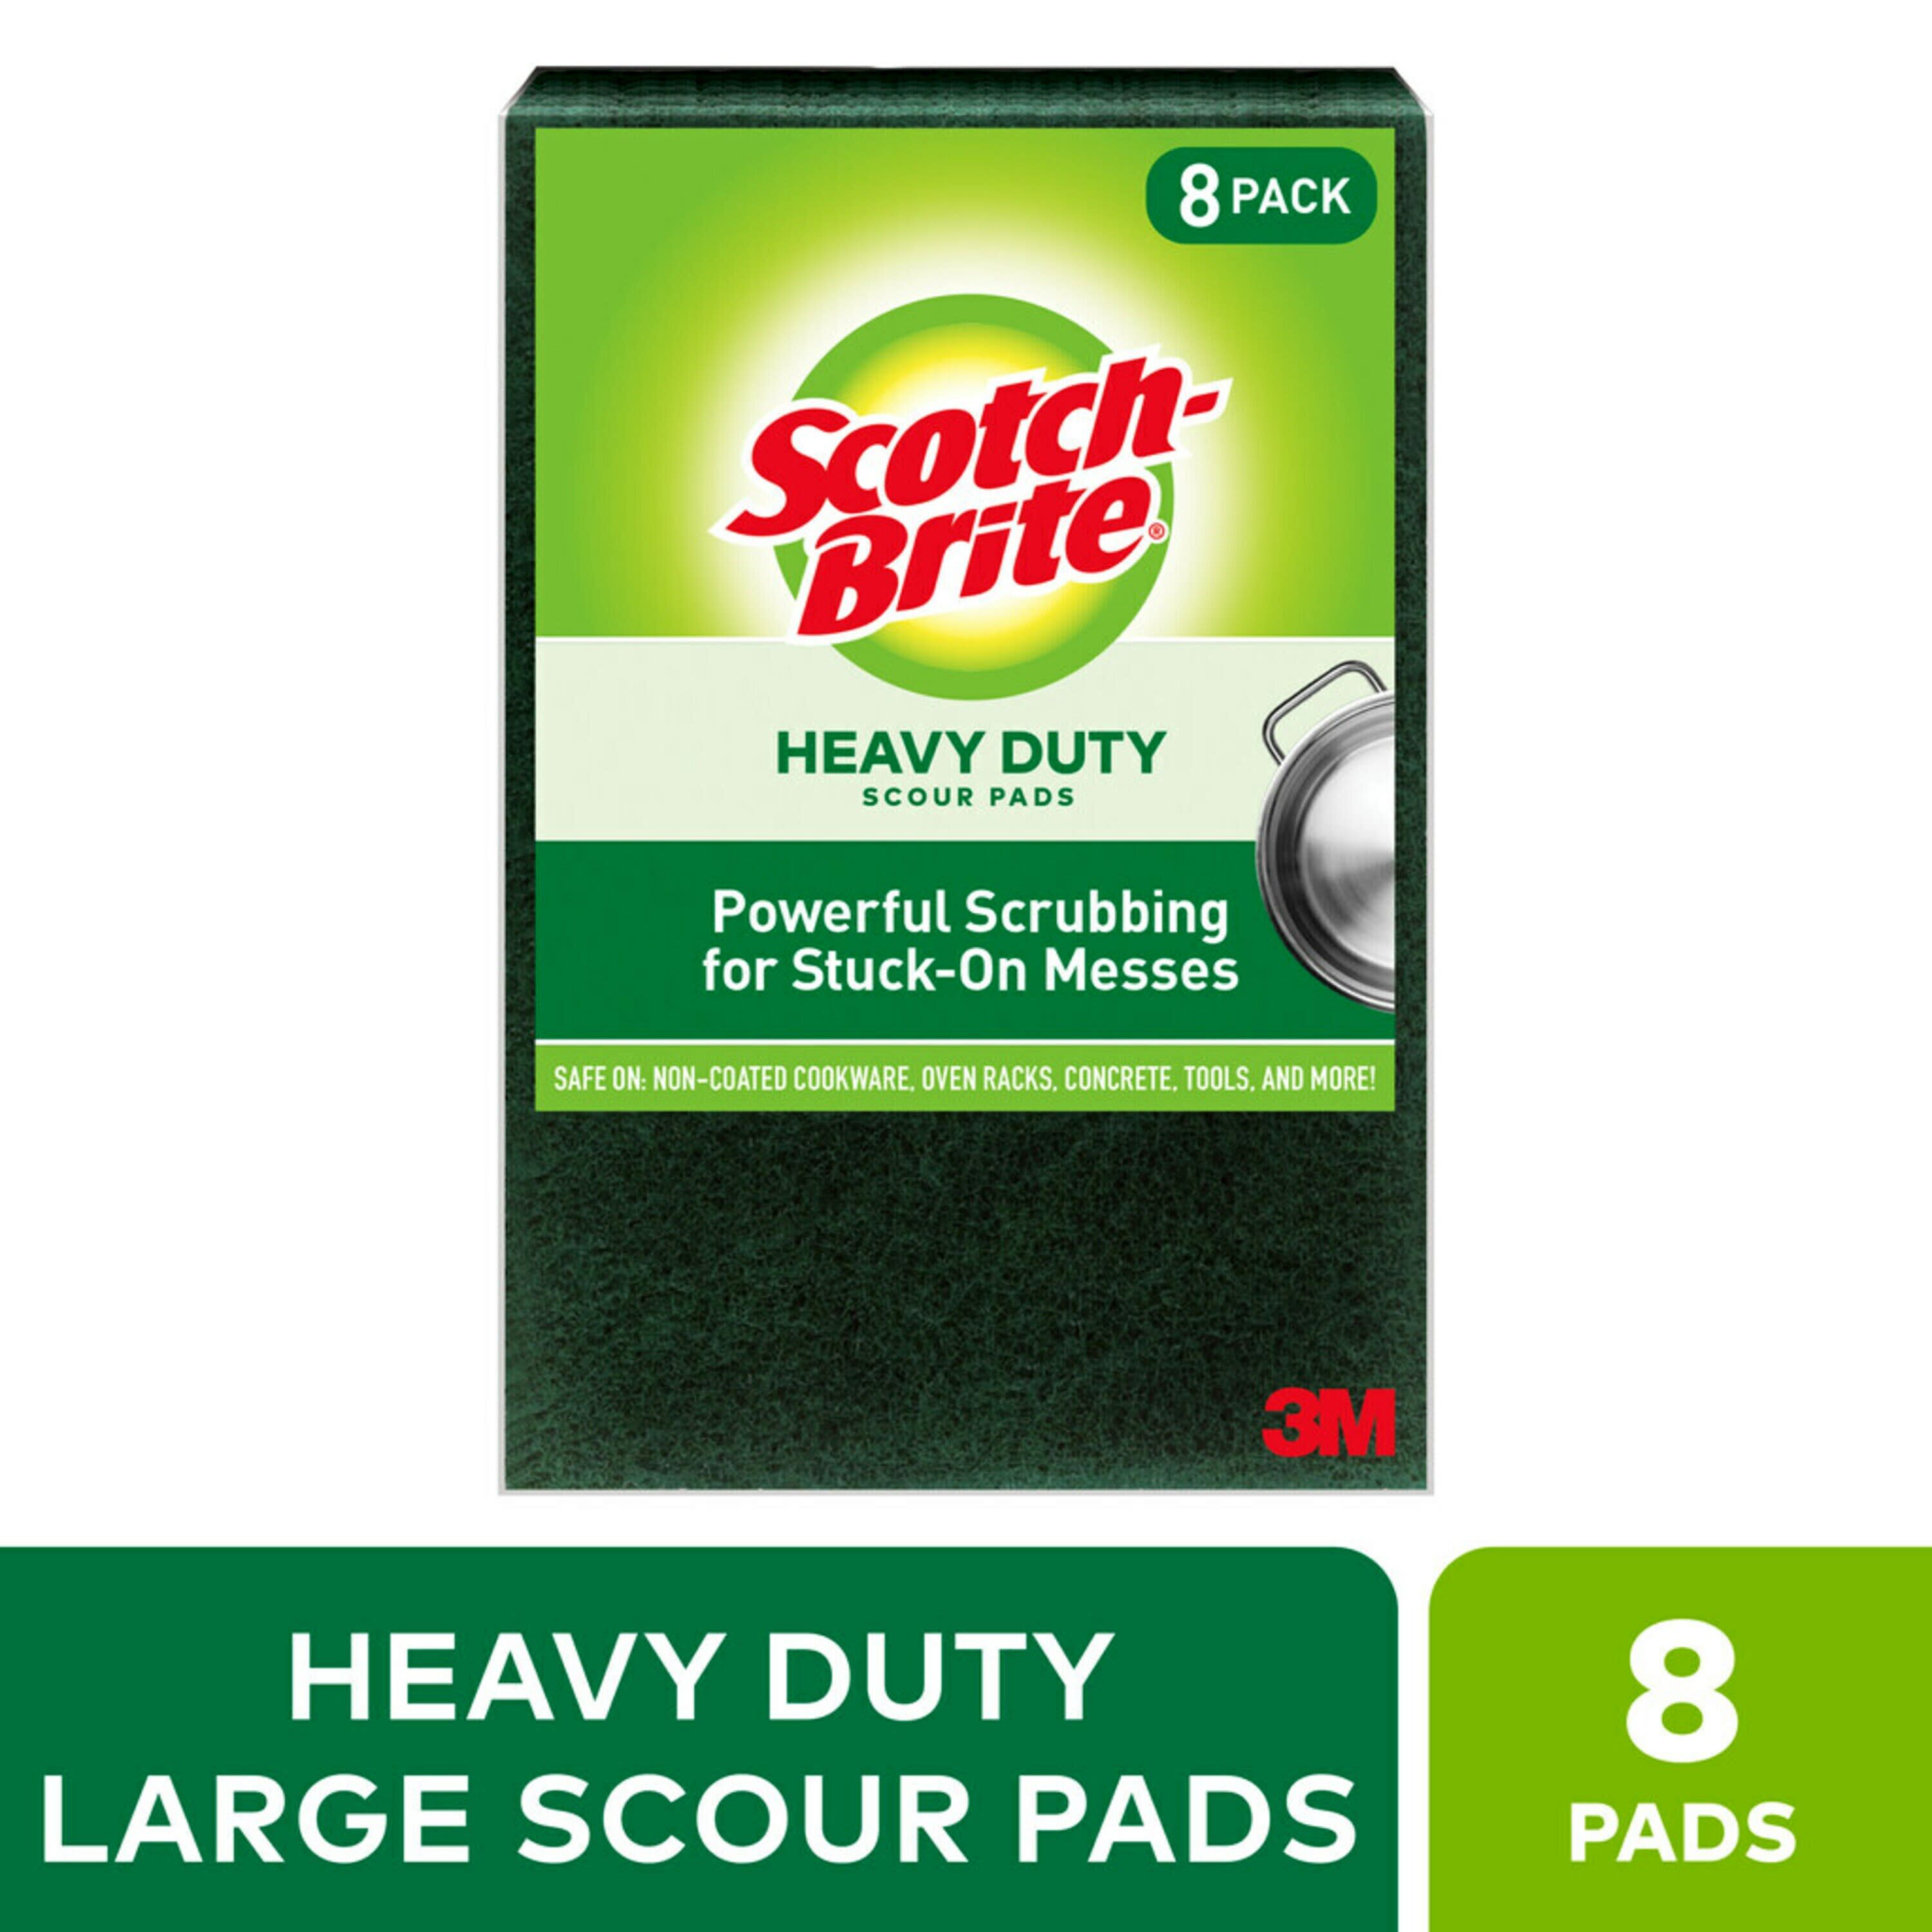 Scotch Brite Scrub Sponge, Large Heavy Duty